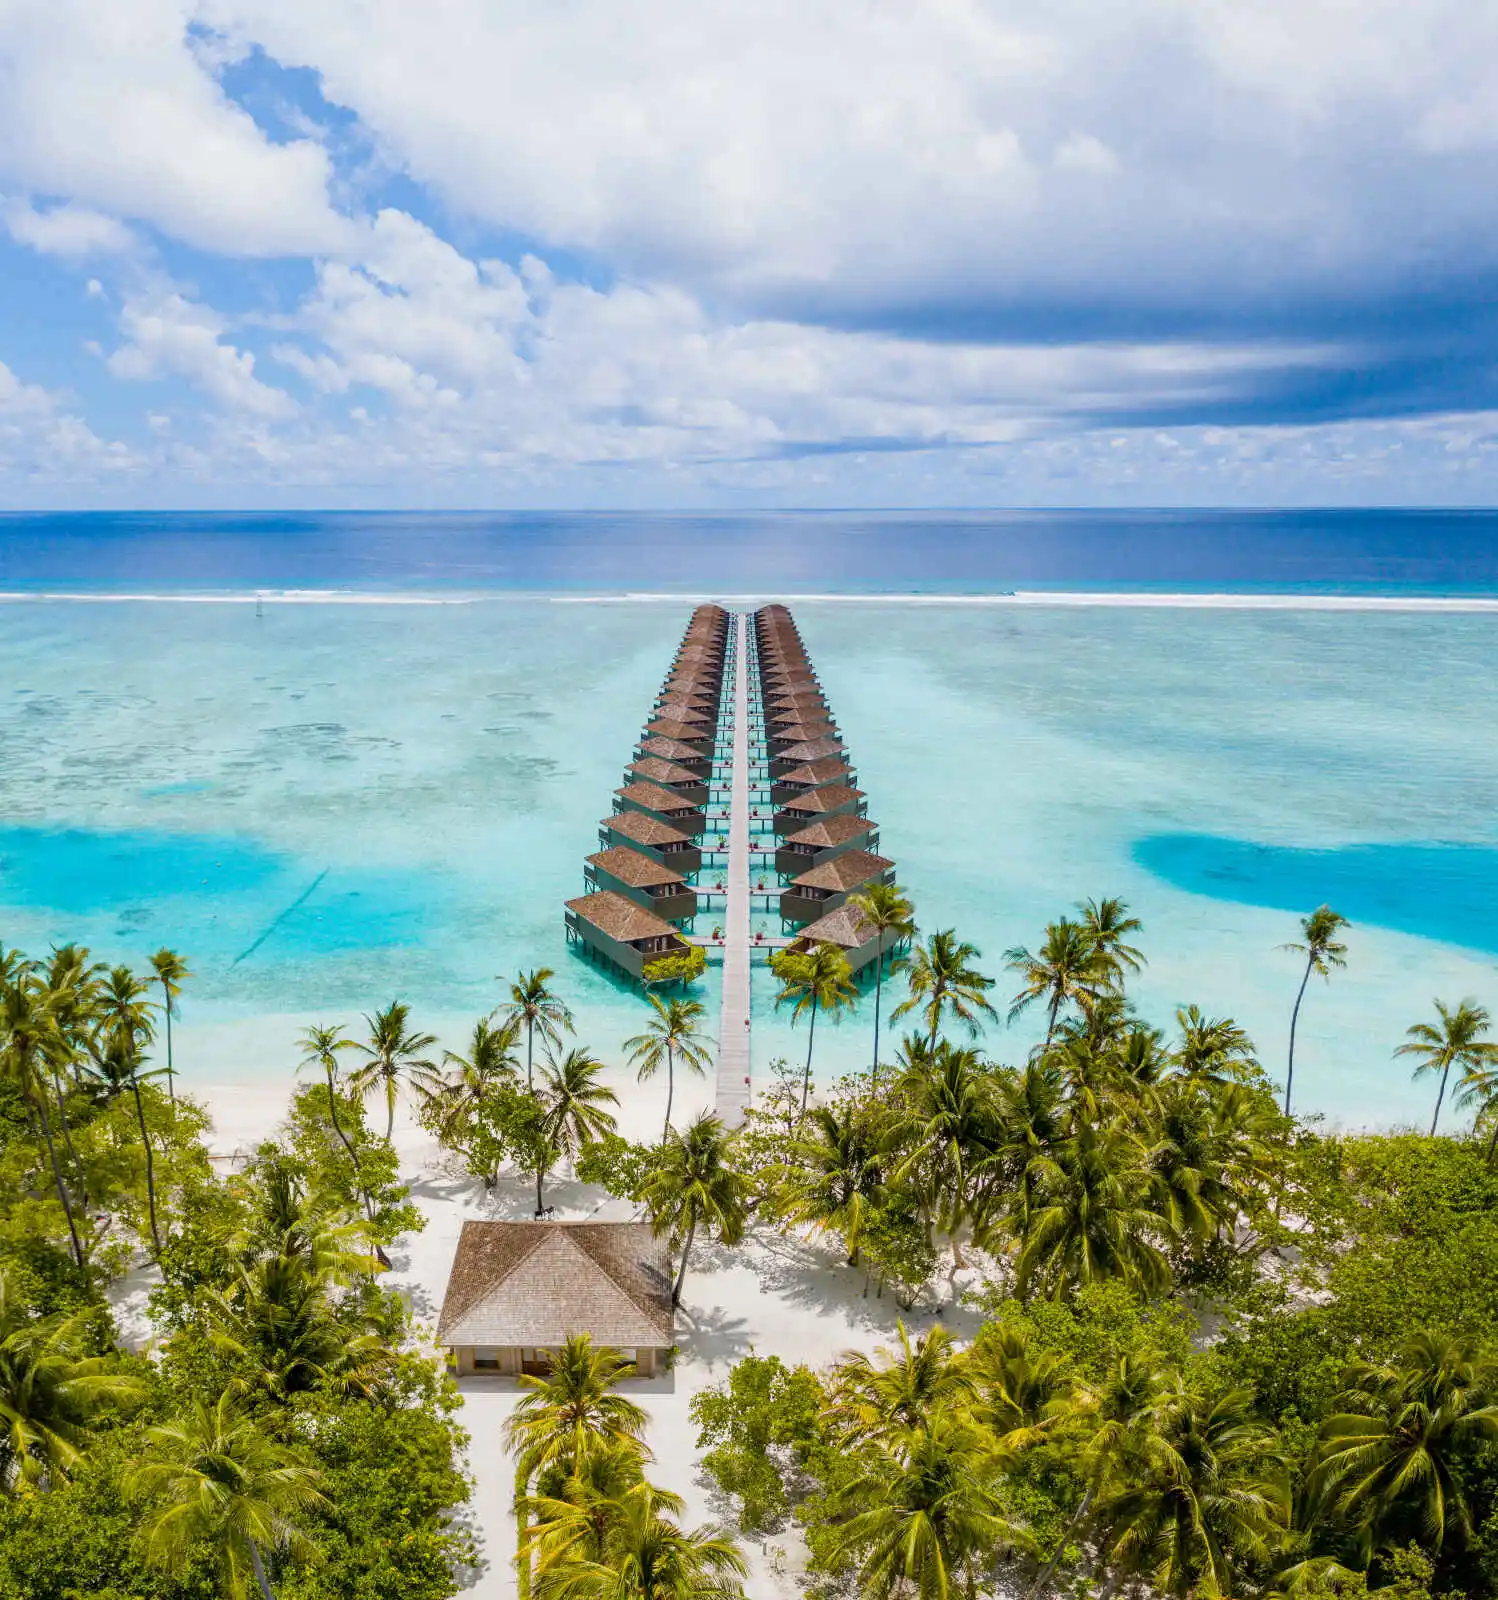 Villas sur pilotis, Meeru Island Resort & Spa, Maldives